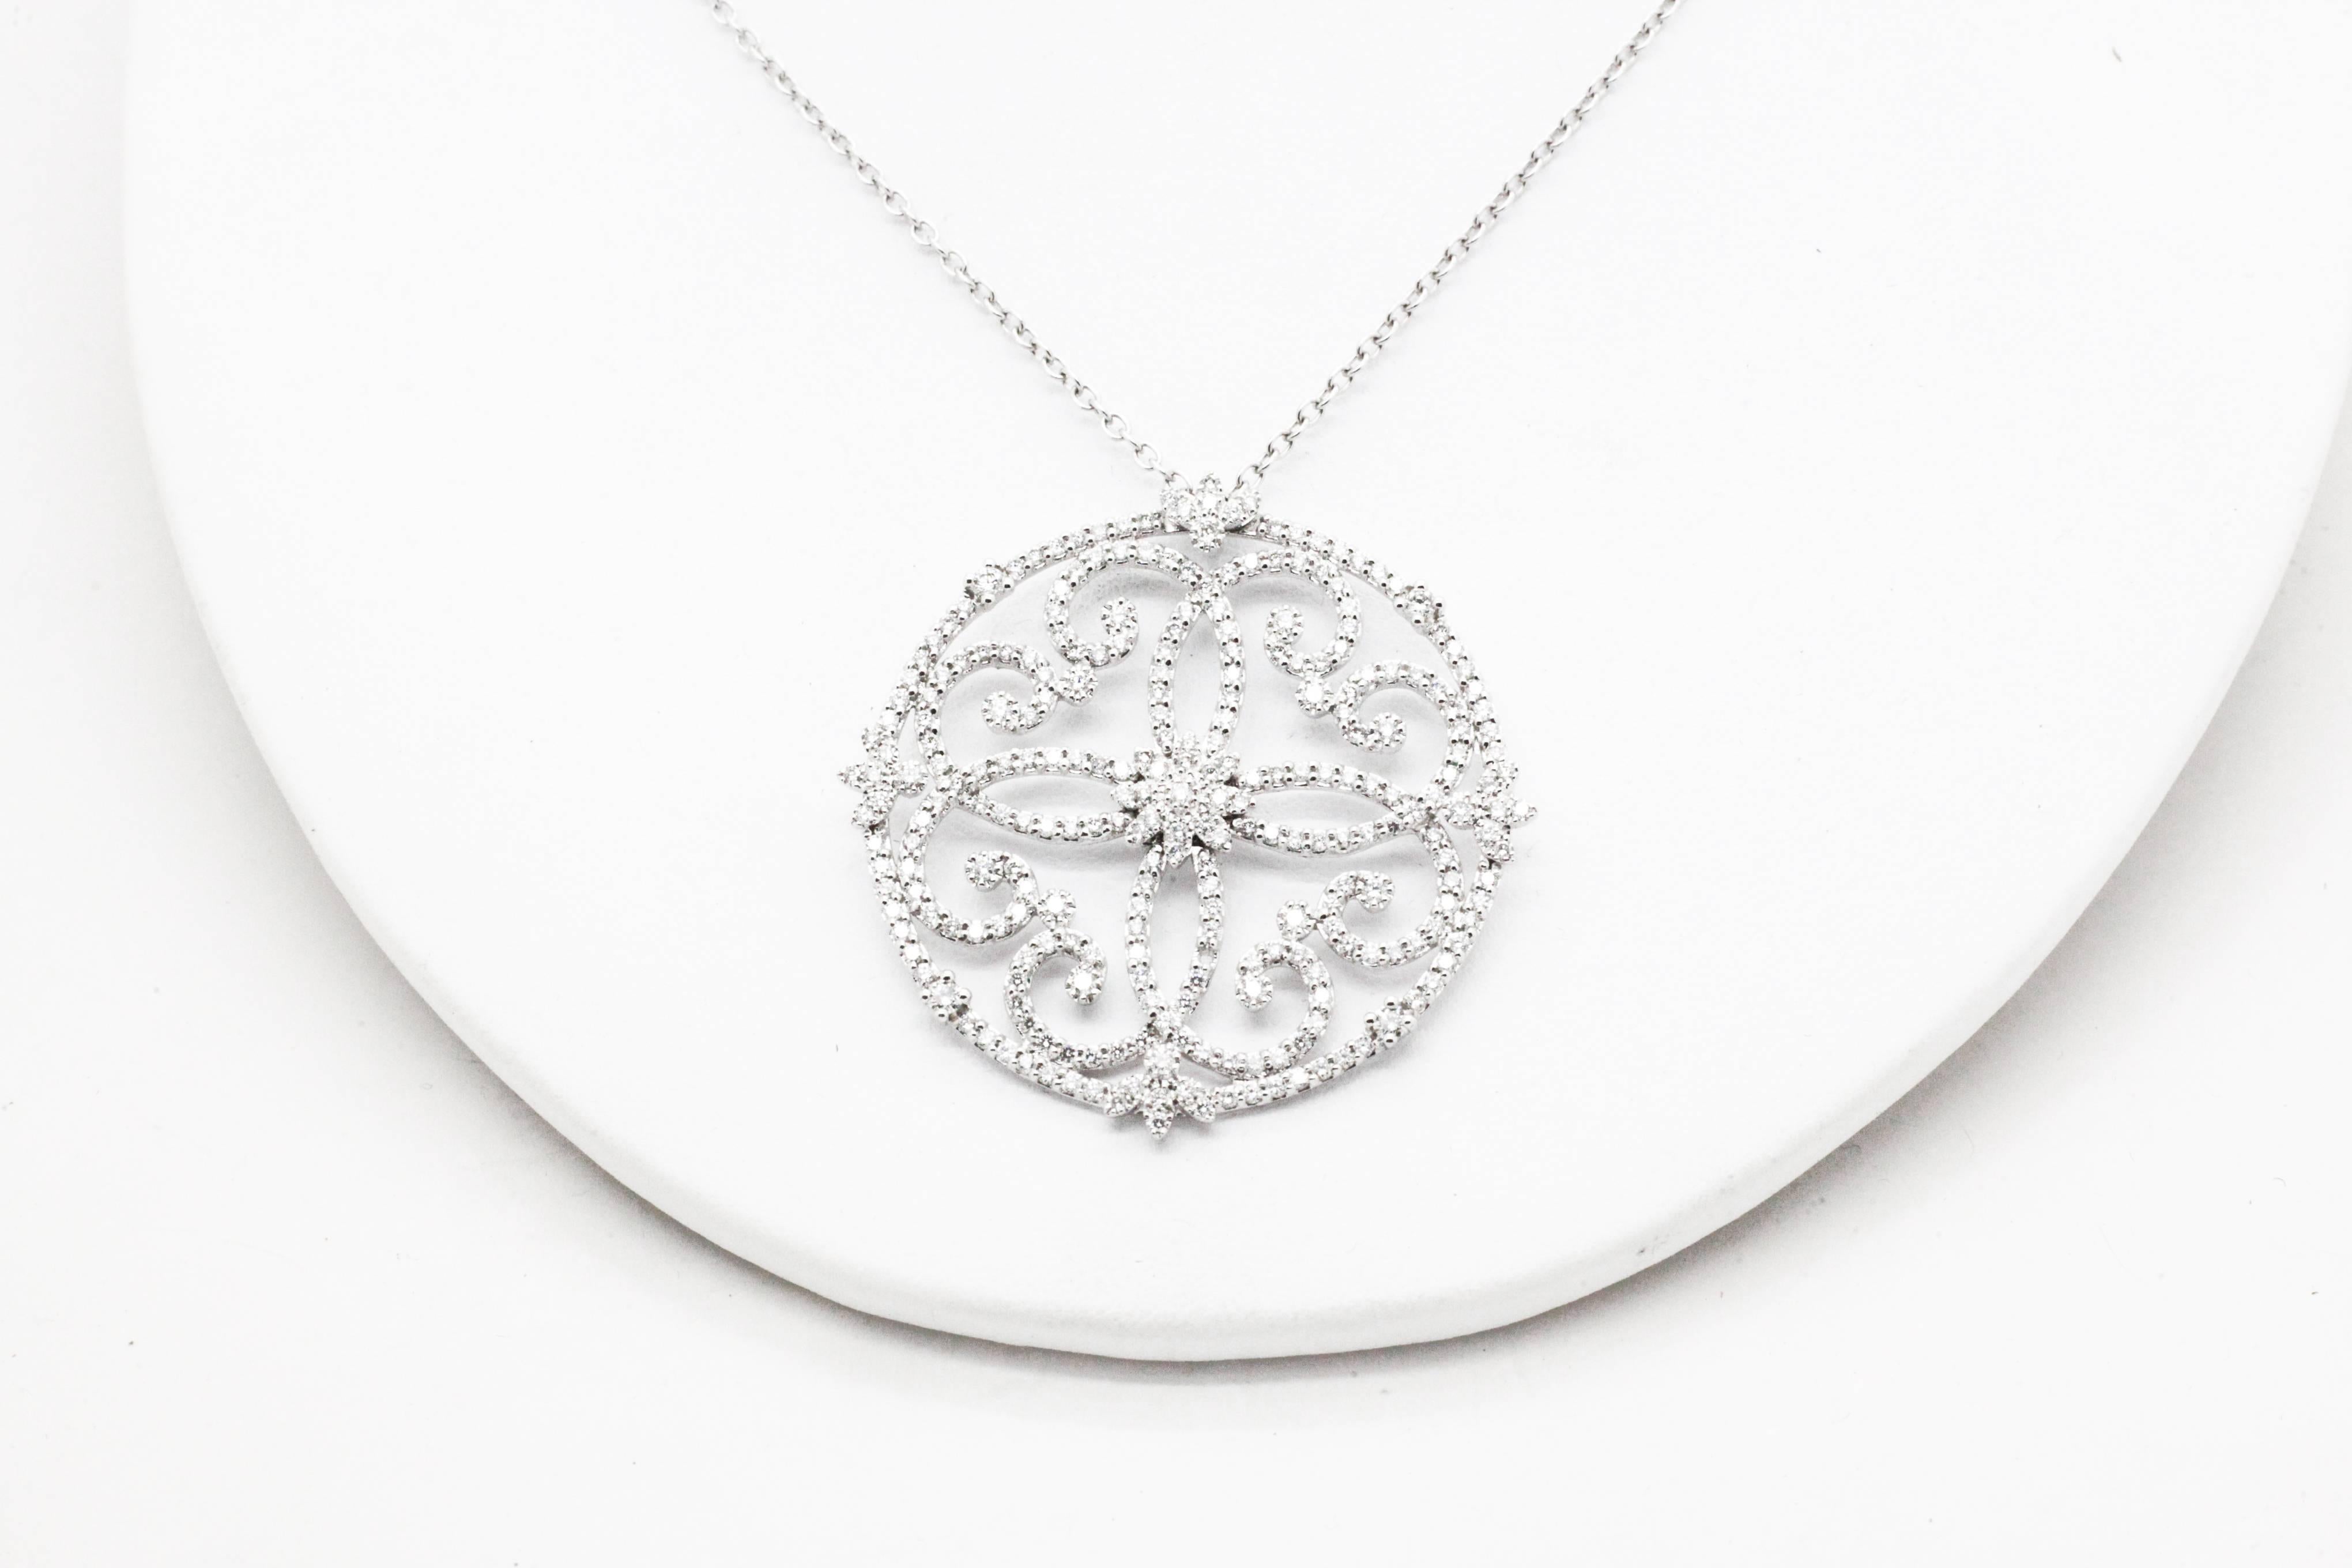 Ferrucci & Co. Diamond Necklace in 18 Karat White Gold, Handmade in Italy 2